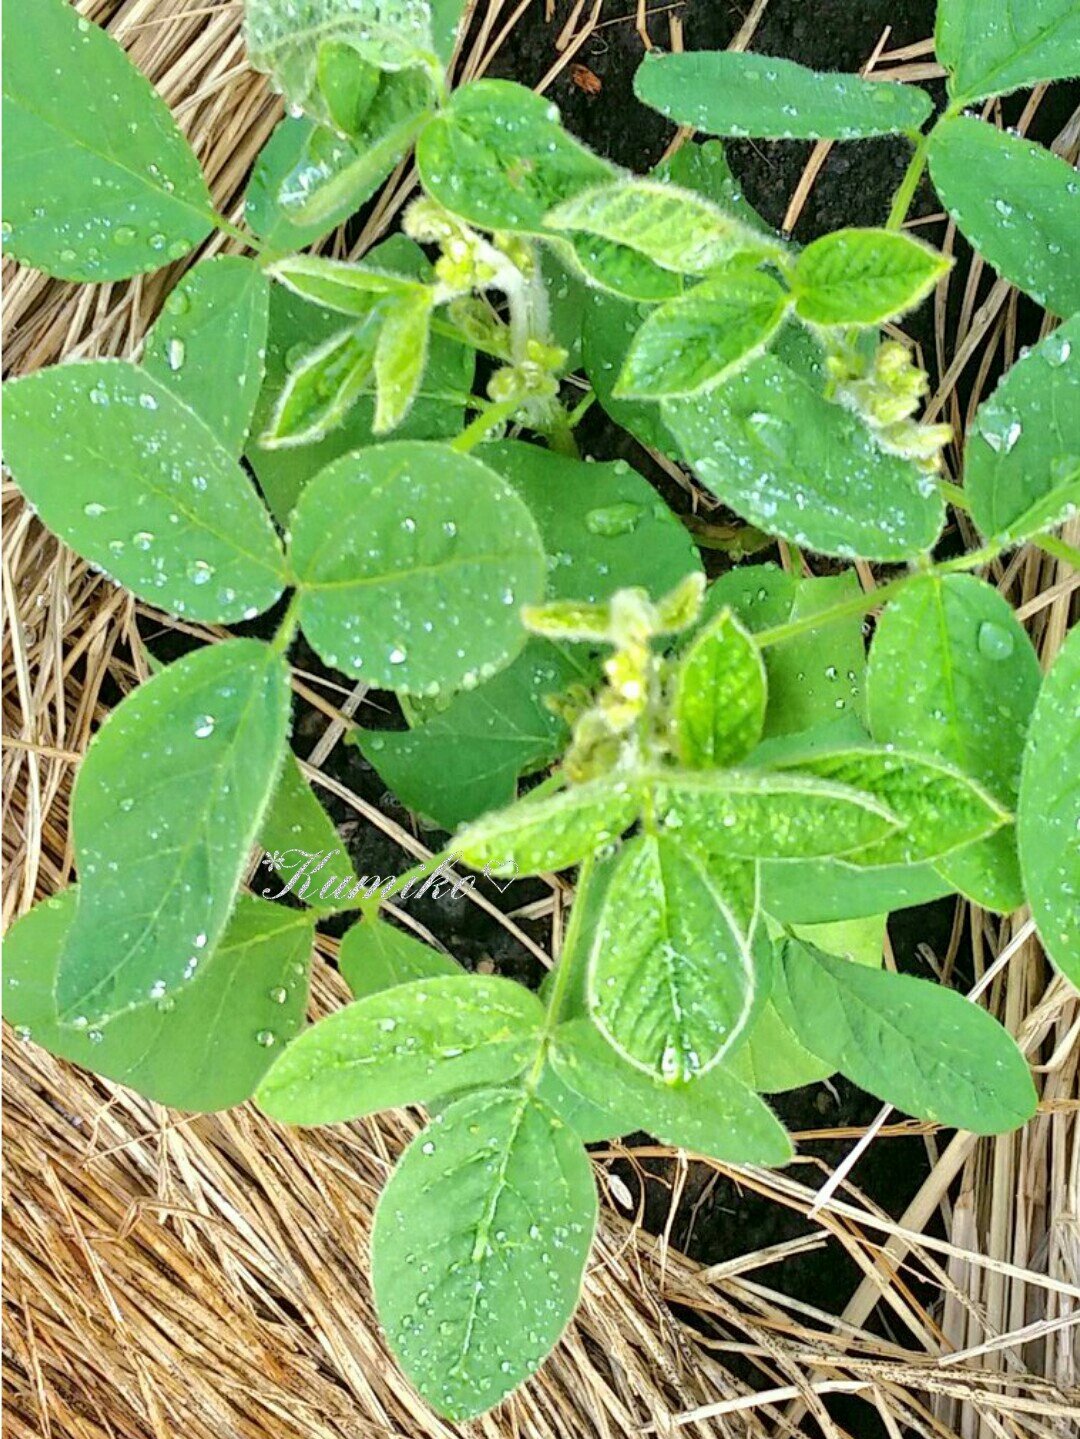 Bluepoppy Bluestar おはよう 良い天気だ 緑のある暮らし グリーン 植物 植物に水を しずく 雫 滴 雨上がり 朝露 枝豆の葉 二十日大根の葉 ラディッシュの葉 マイグリーンルーム マイグリーンライフ 栽培 ガーデニング プランツ